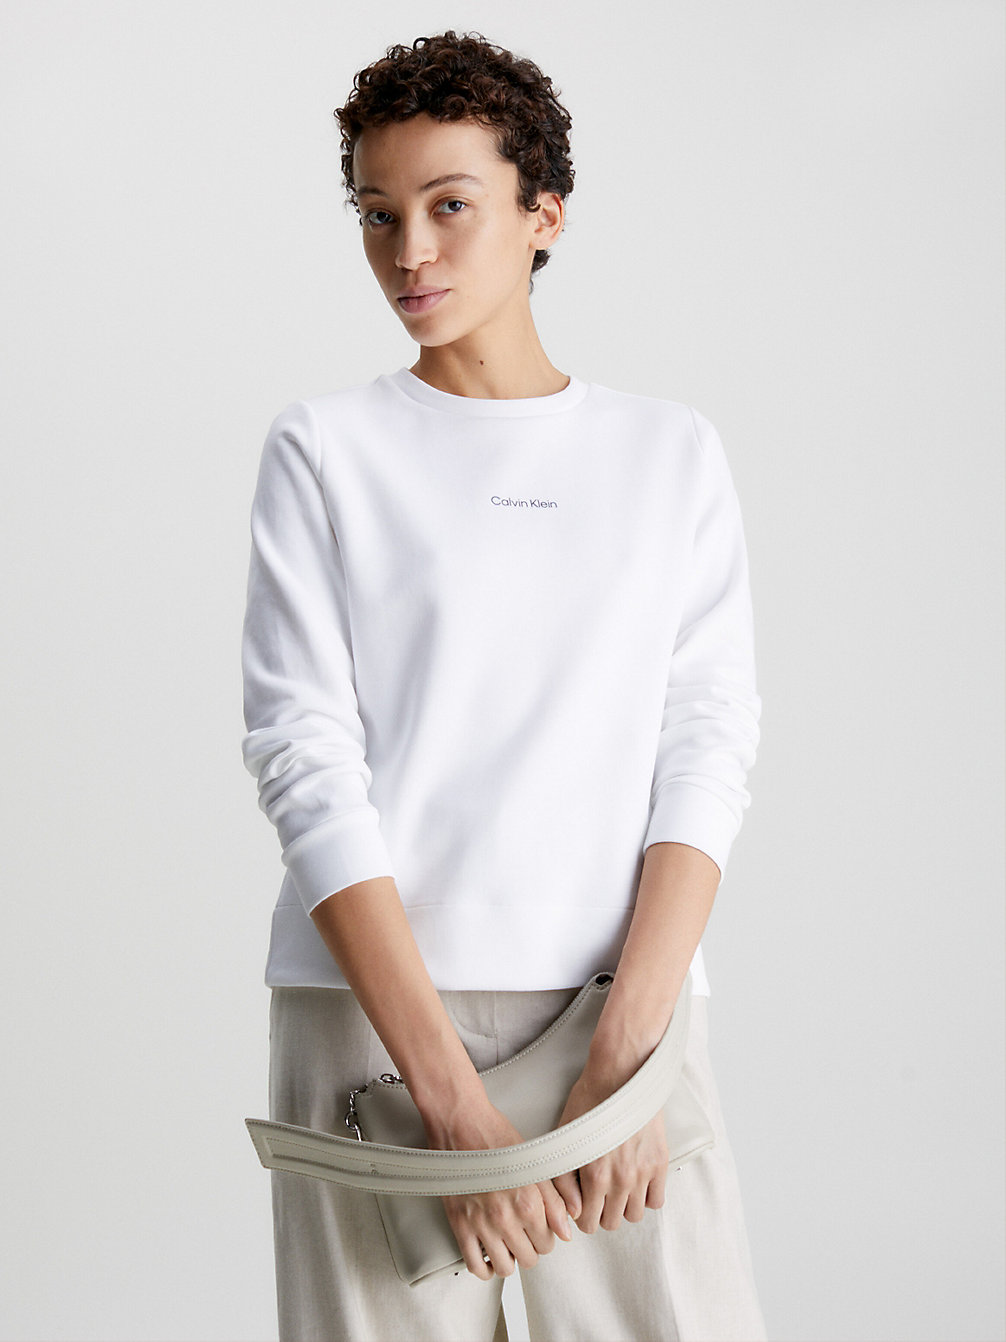 BRIGHT WHITE > Bluza Z Przetworzonego Poliestru > undefined Kobiety - Calvin Klein